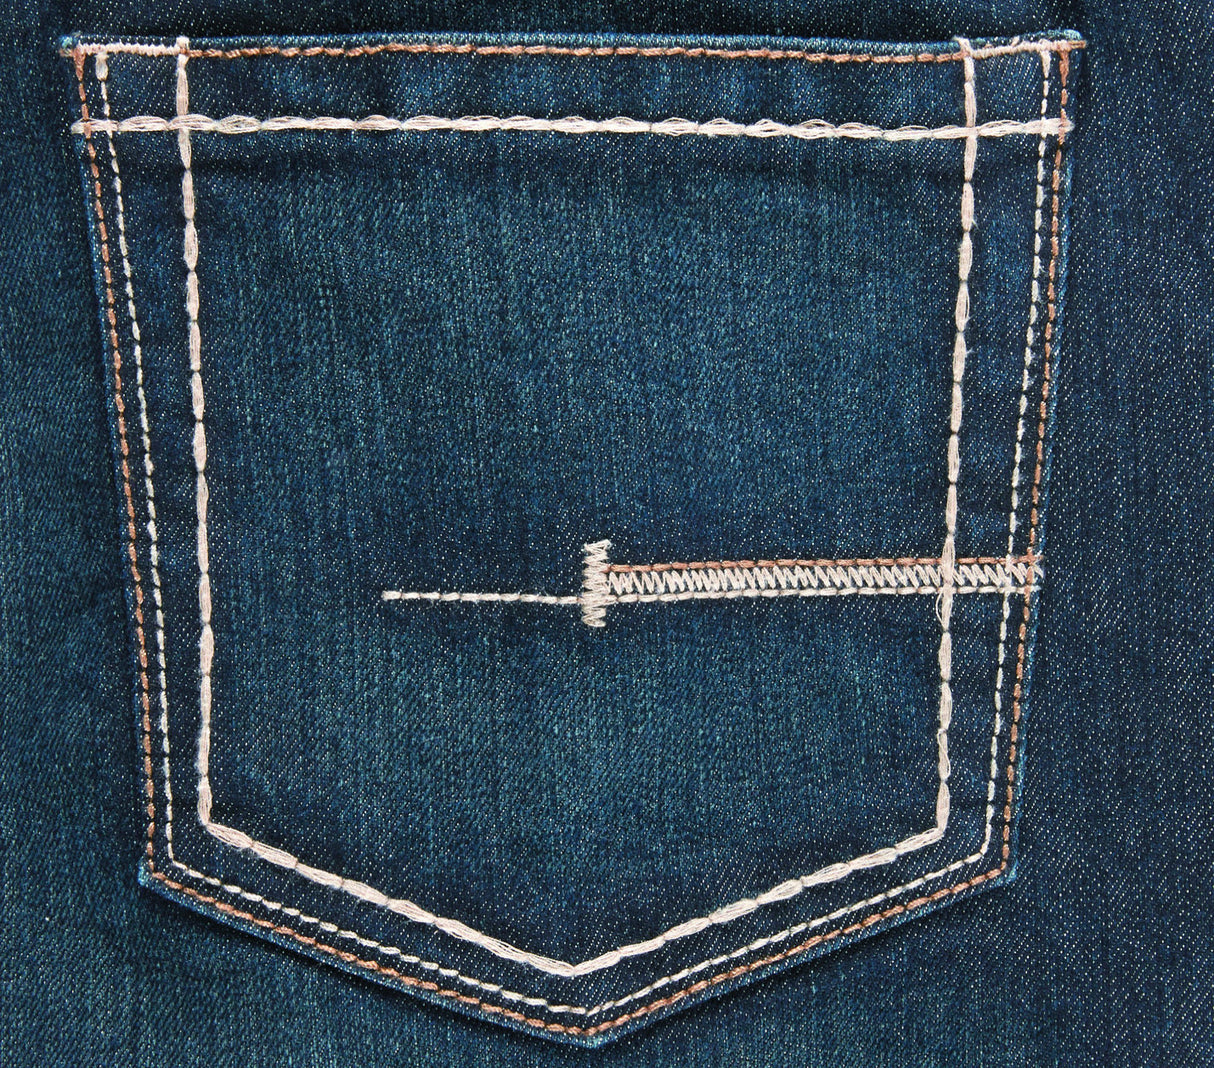 Ariat Mens Rebar Fashion M5 Slim Straight Ironside Jeans